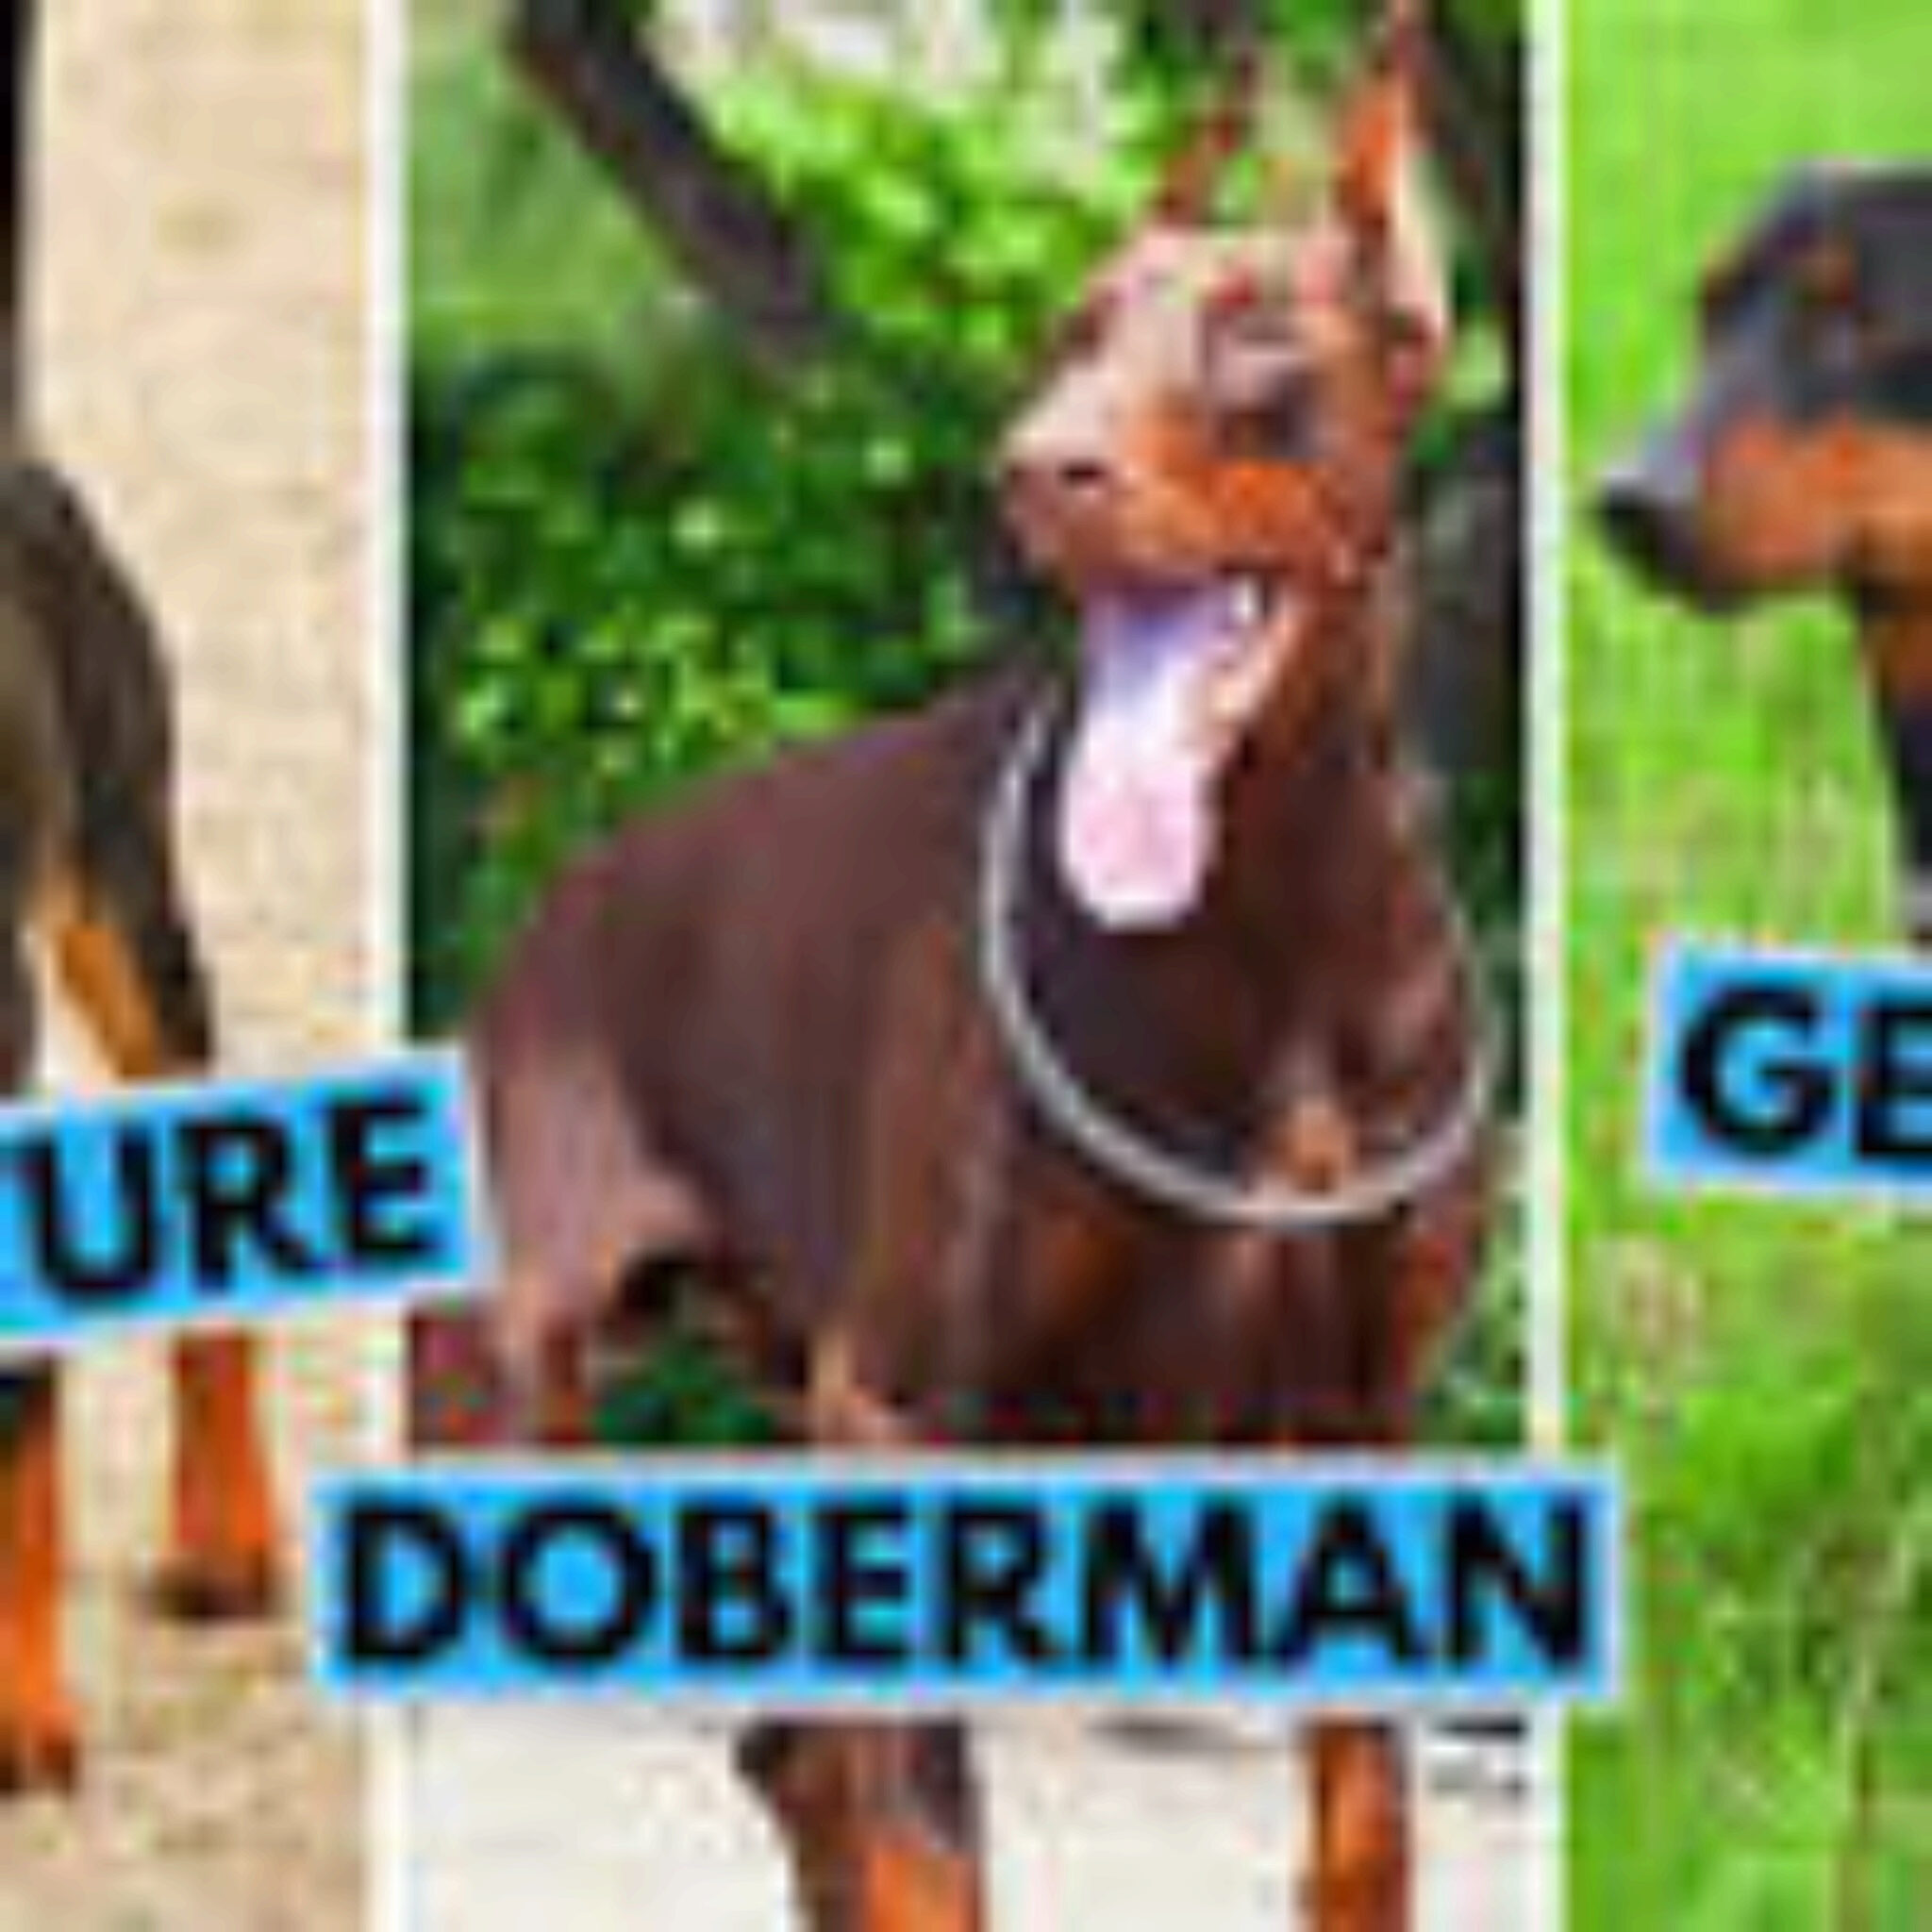 Rotterman Rottweiler amp Doberman Mix Informazioni Immagini Cuccioli Tratti